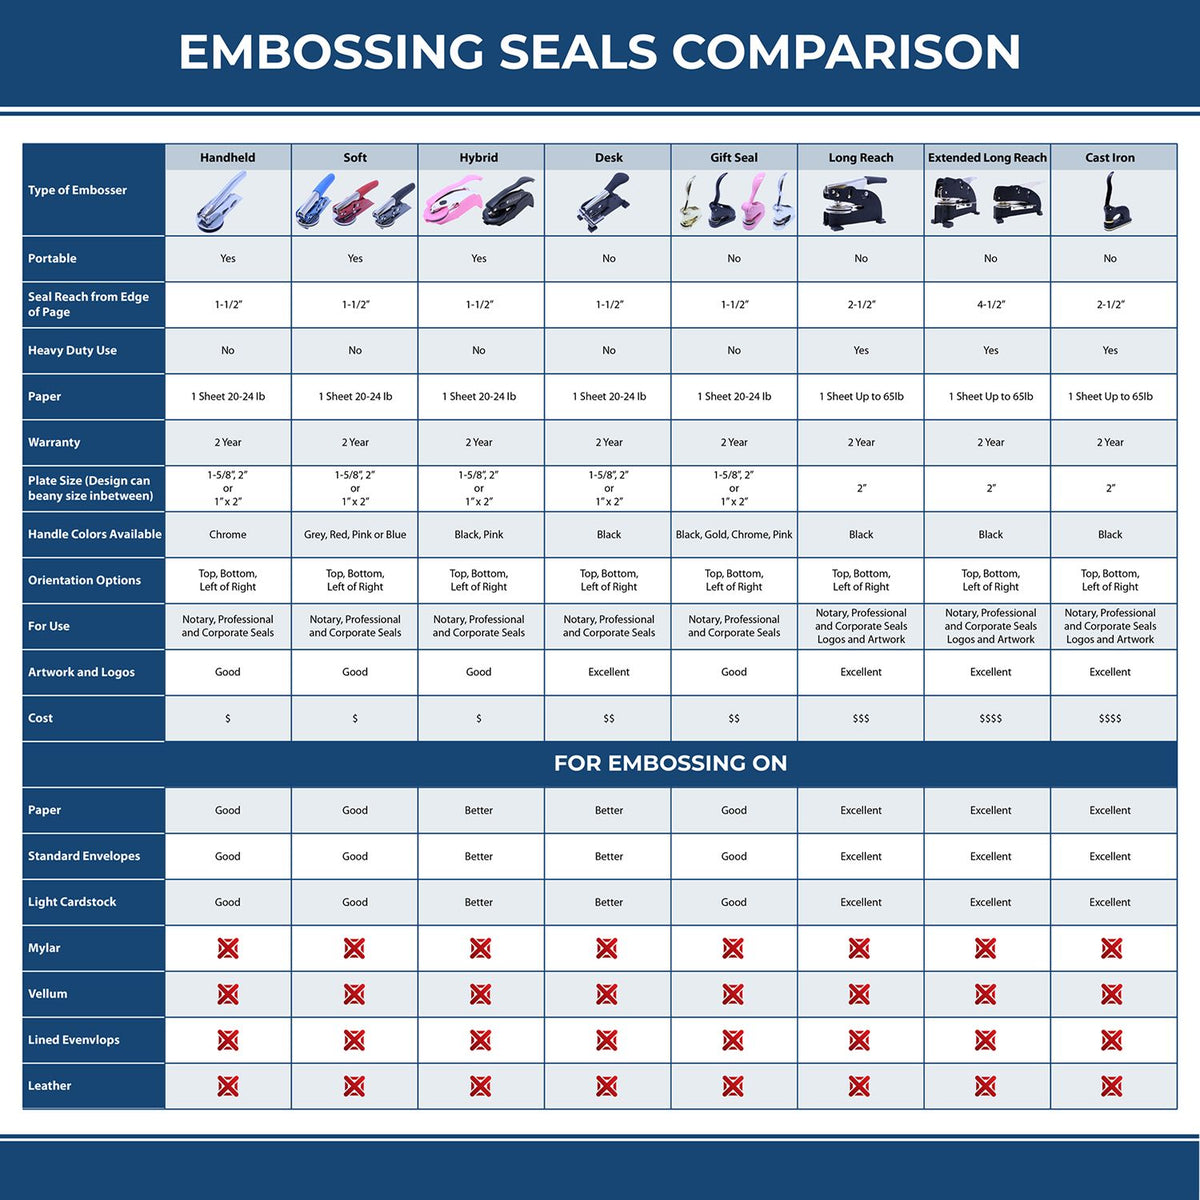 Engineering Geologist Cast Iron Desk Seal Embosser 3027ENGEO Embossing Seal Comparison